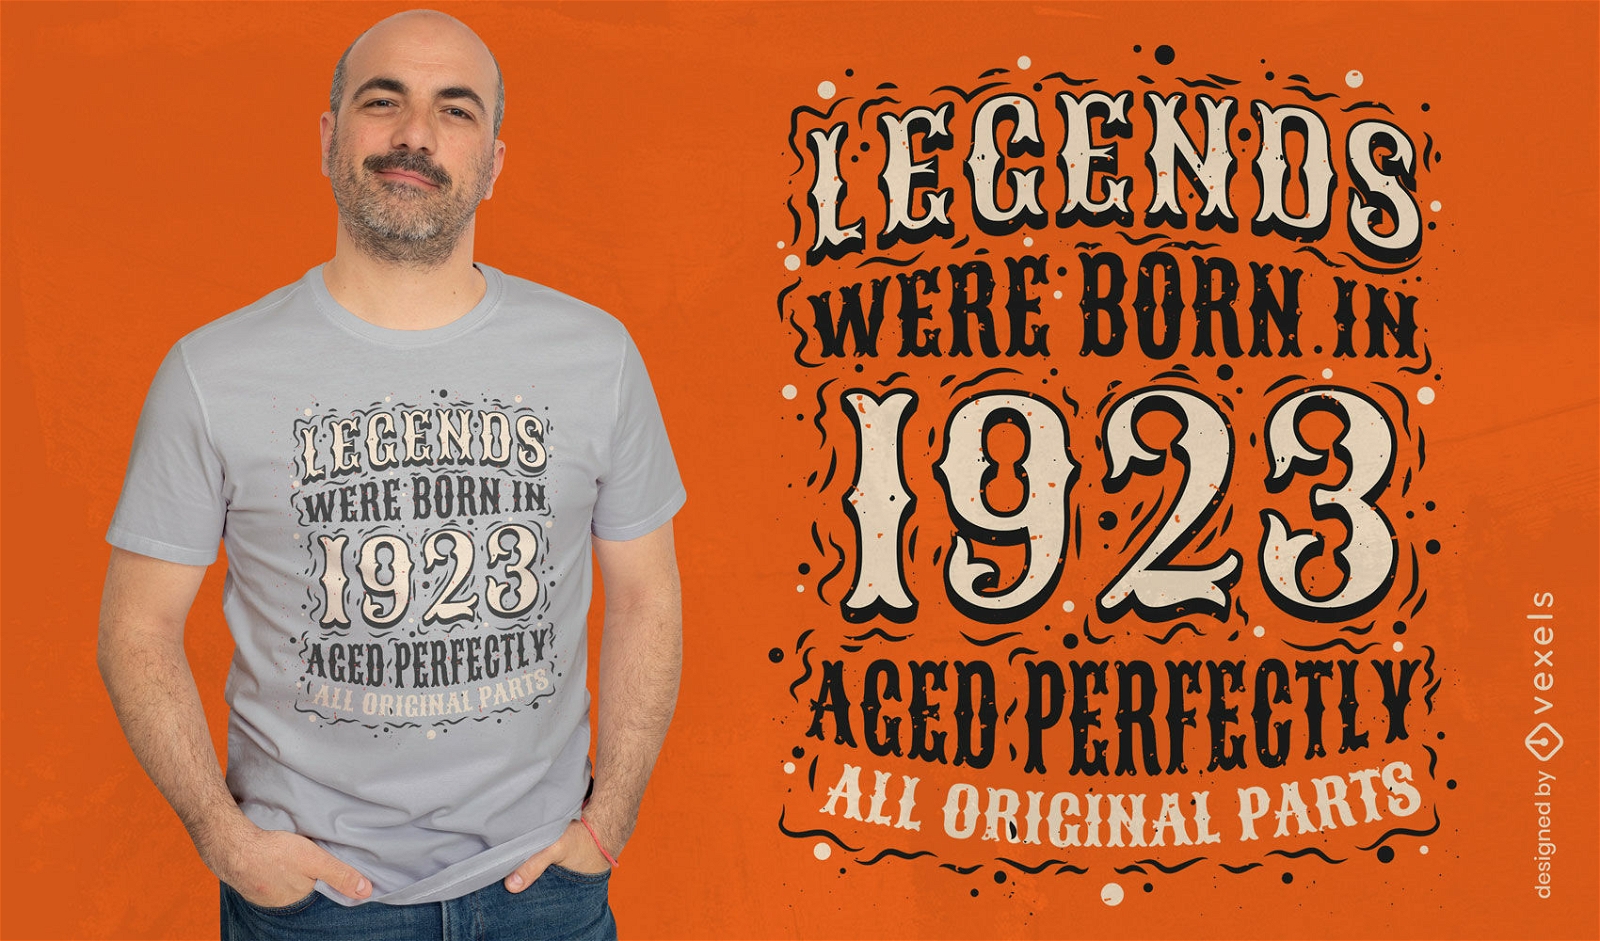 Vintage 1923 birthday quote t-shirt design